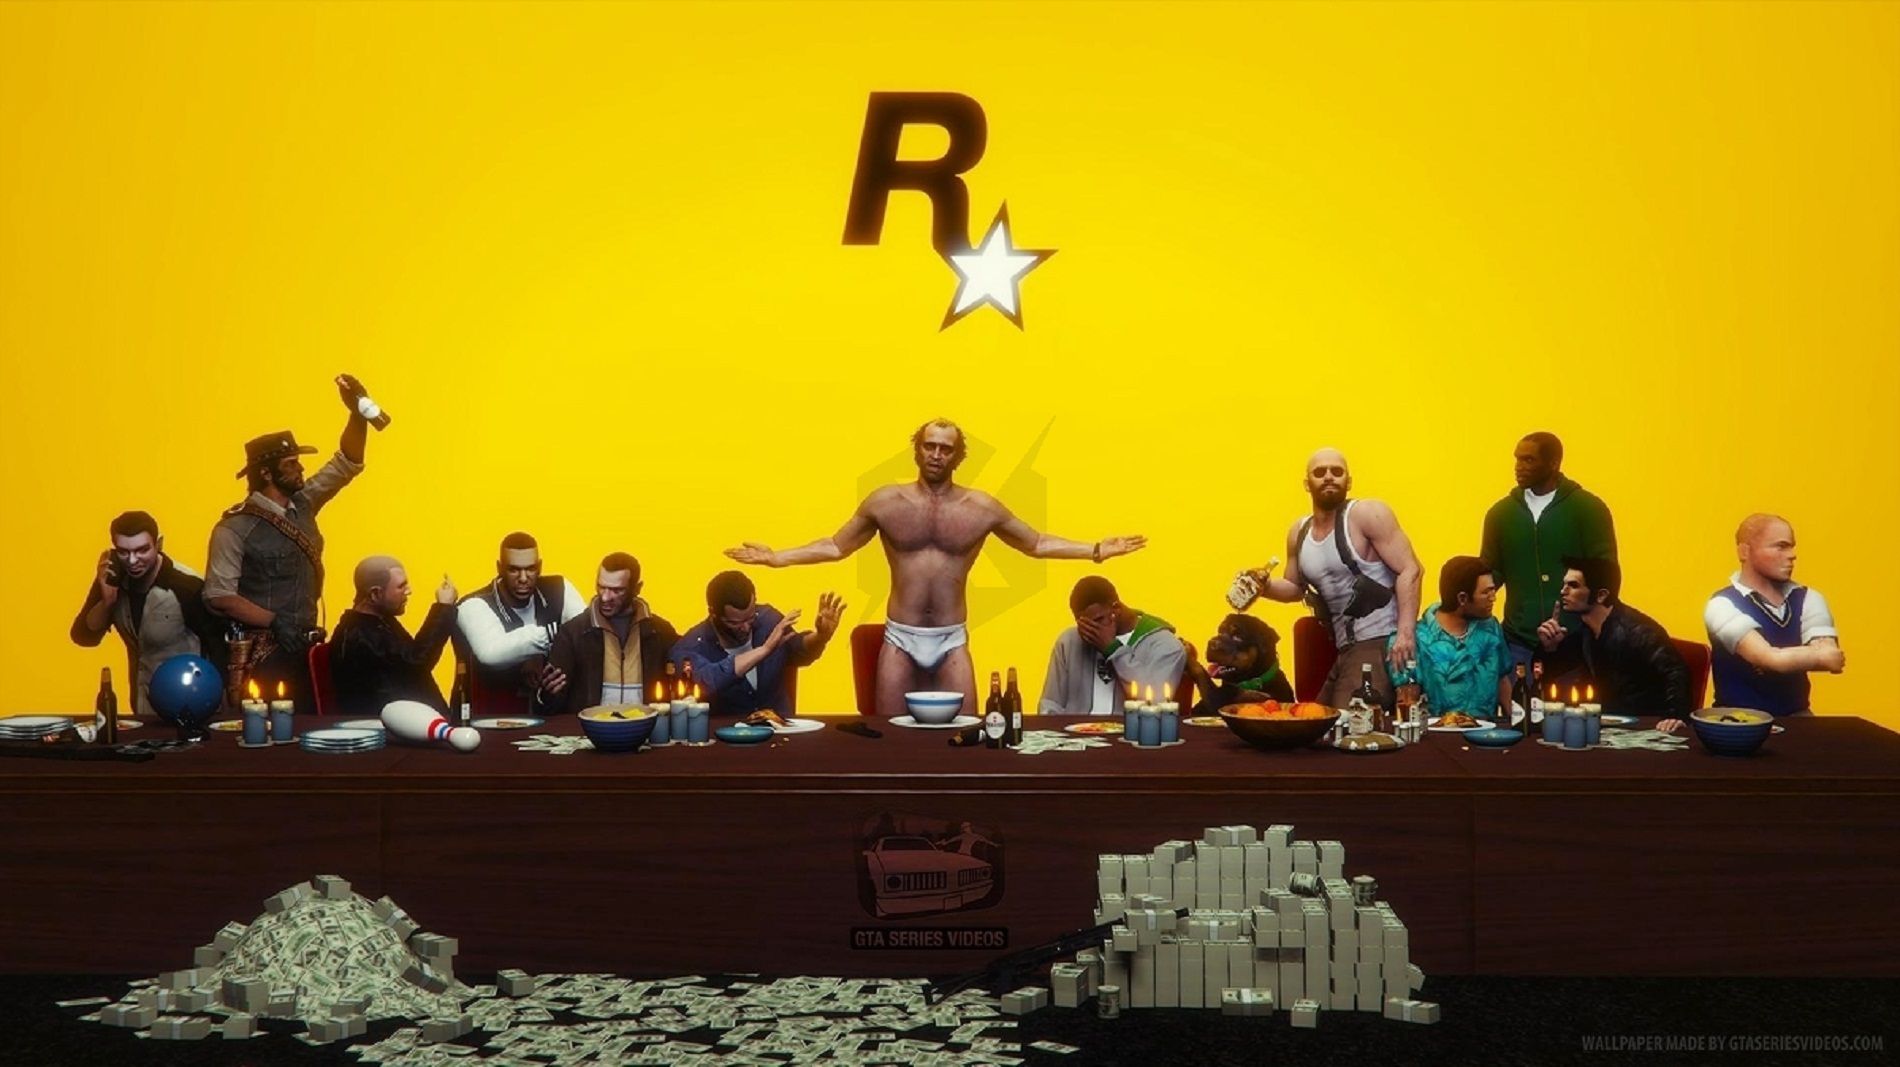 Rumors Circulate That Rockstar May Announce Grand Theft Auto VI